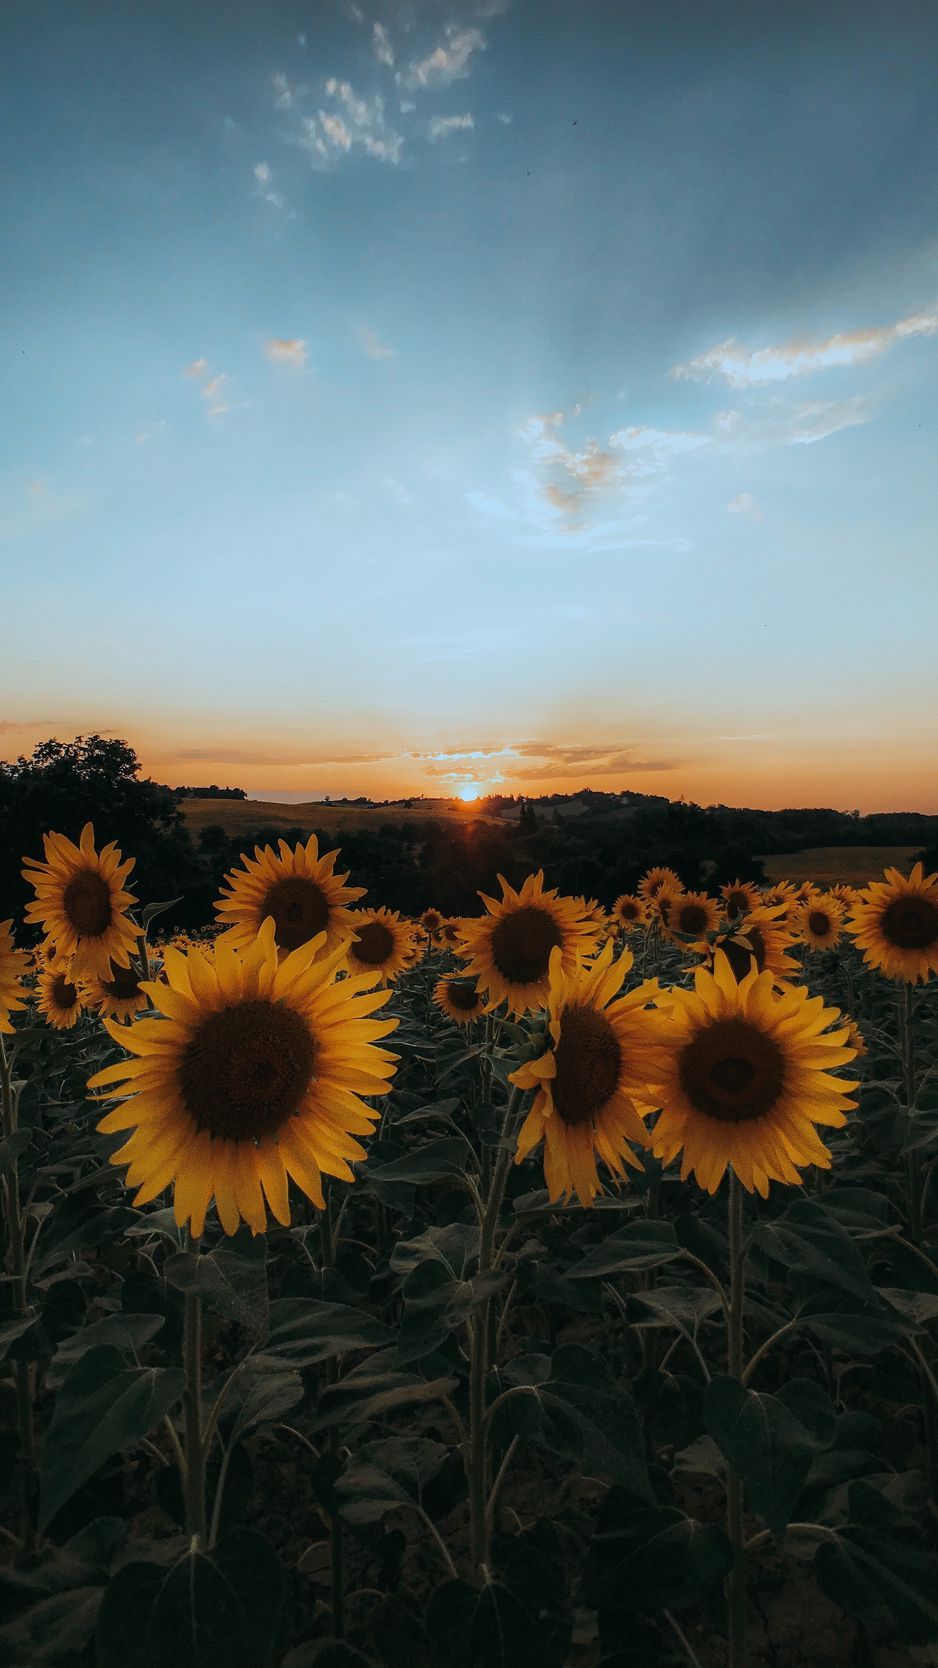 Download wallpaper 938x1668 sunflowers, flowers, yellow, field